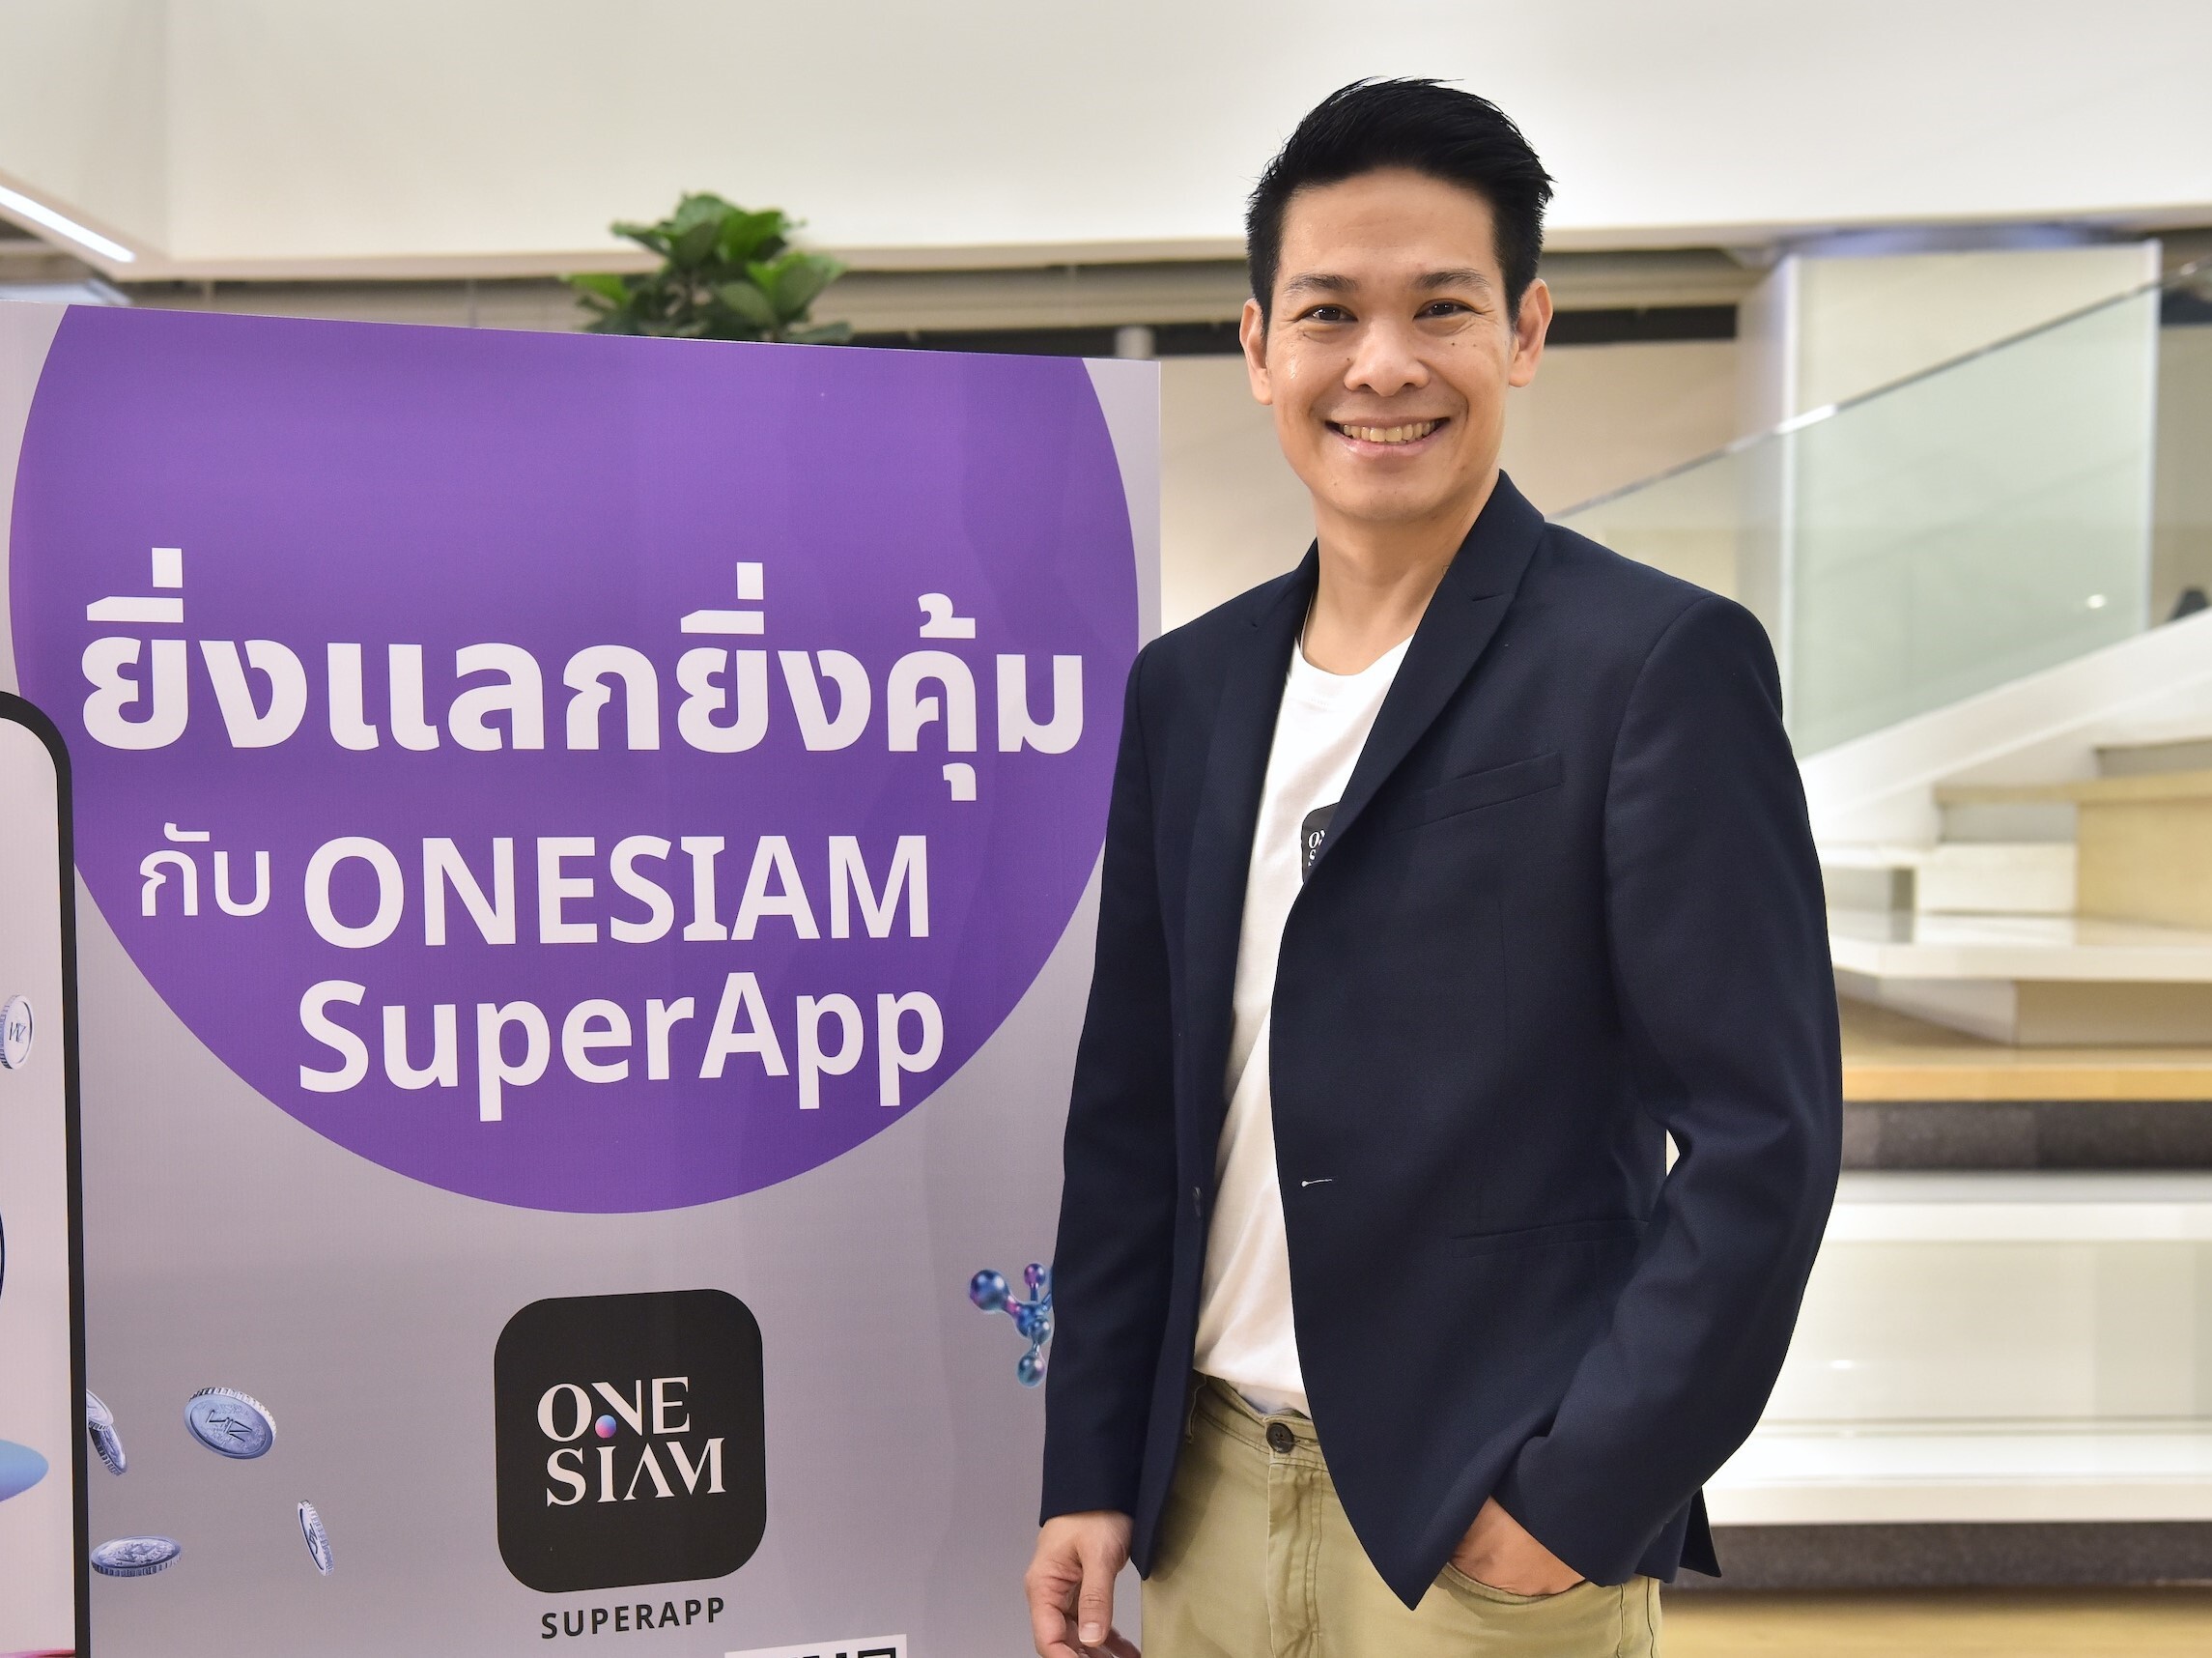 ONESIAM SuperApp ฉลองครบรอบ 1 ปี แห่งการยกระดับประสบการณ์ช้อปปิ้ง เพิ่มบริการ ONESIAM Chat &amp; Shop ให้ช้อปสินค้าลักซ์ชูรี่ง่ายๆ พร้อมโปรโมชั่นสุดคุ้ม